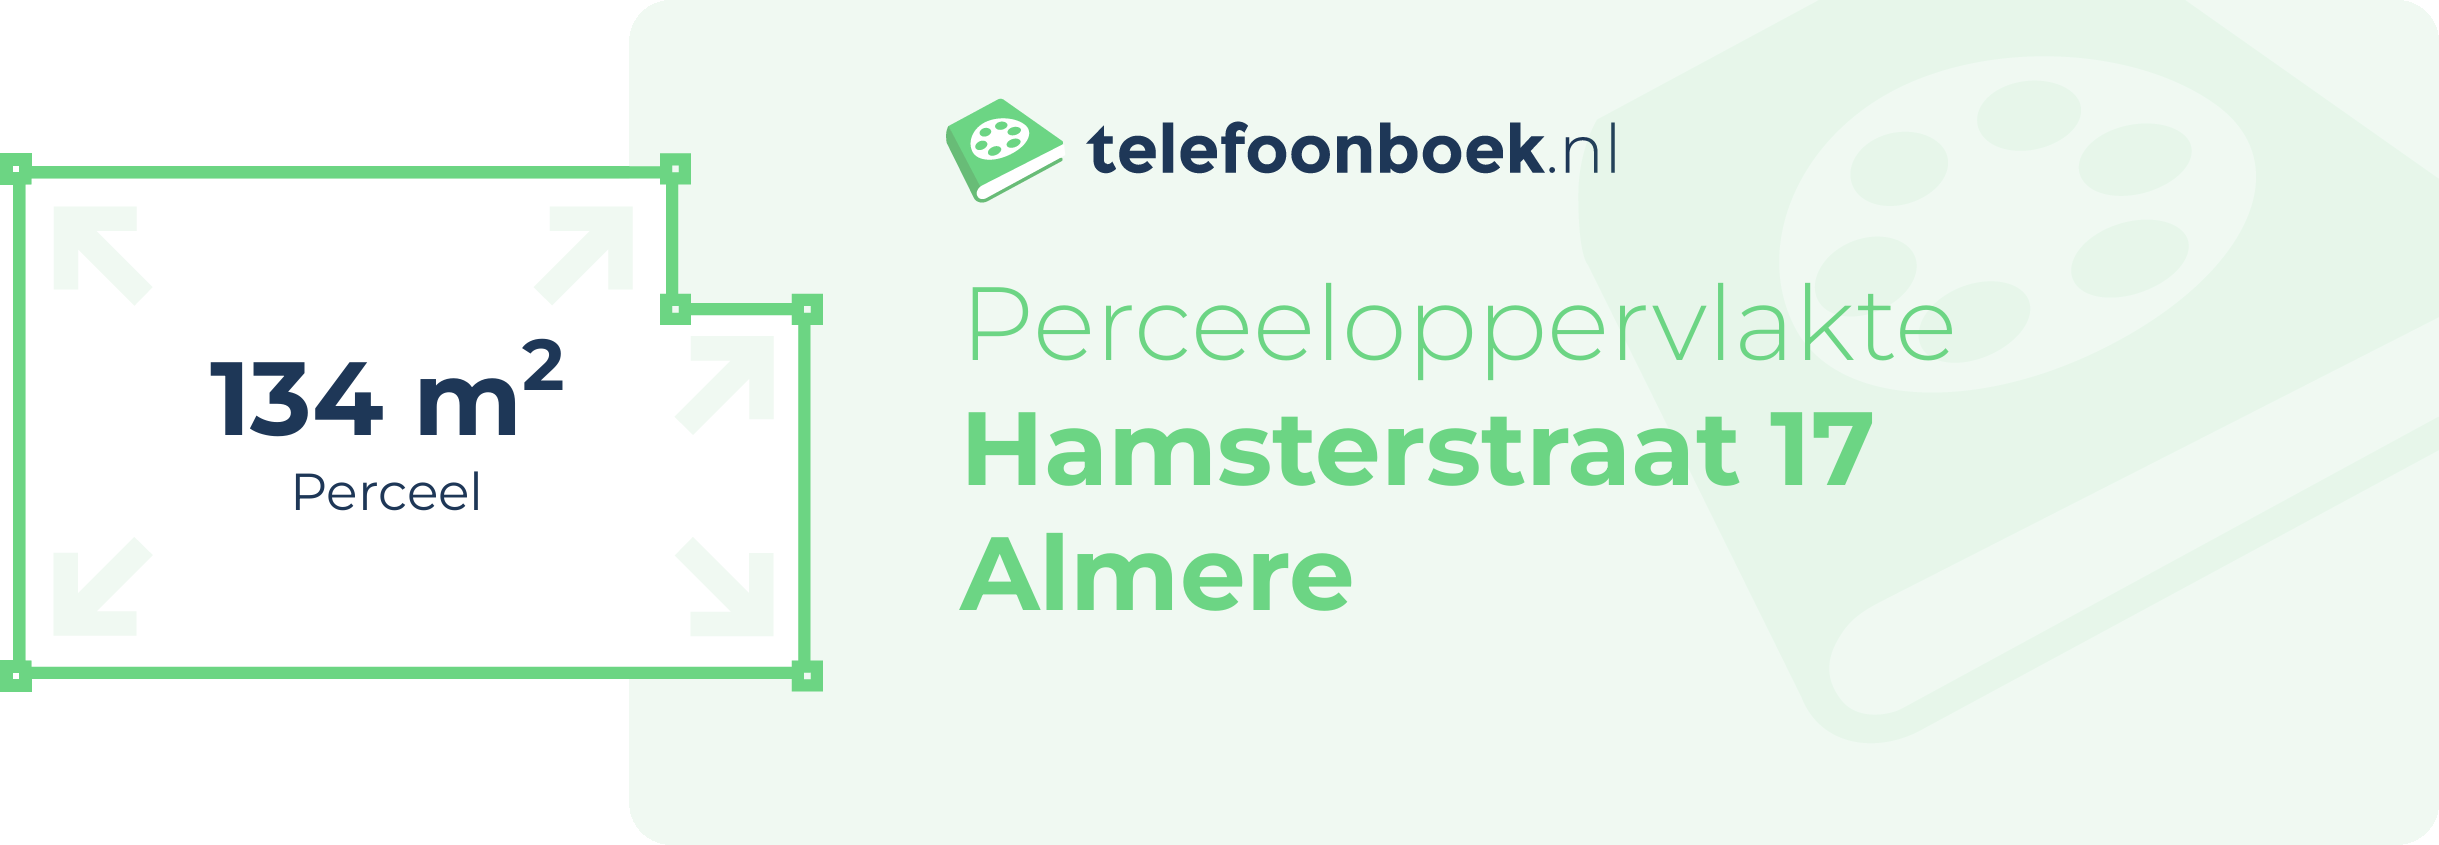 Perceeloppervlakte Hamsterstraat 17 Almere